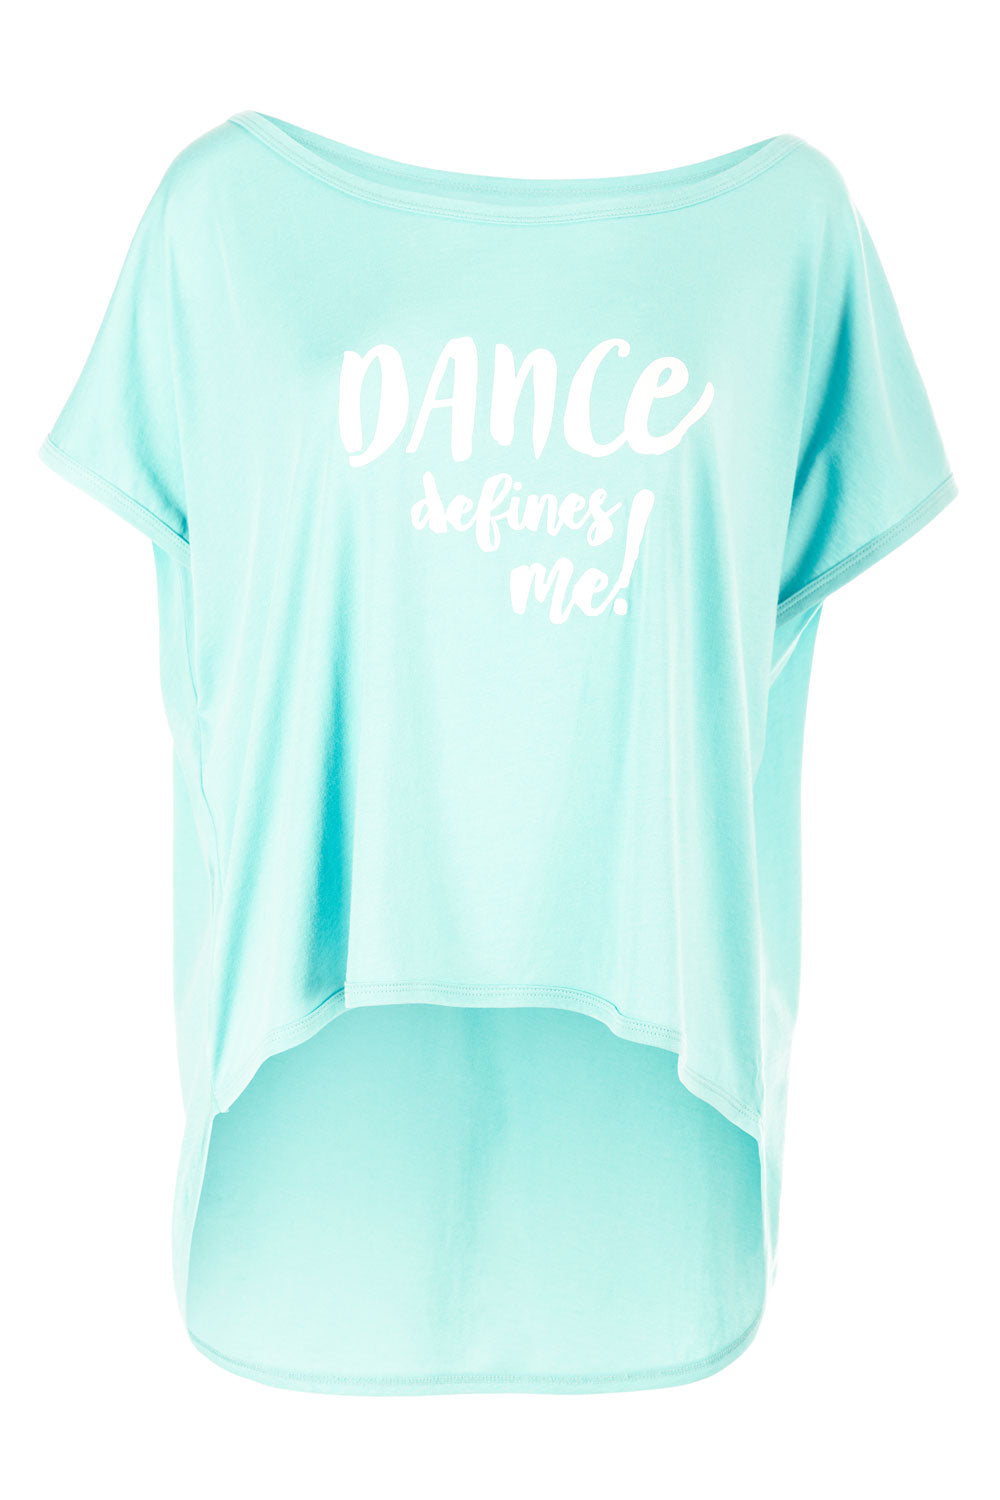 Ultra leichtes Modal-Shirt MCT017 mit dem Aufdruck „DANCE defines me!“ –  NDCFIT Tanzshop Villach